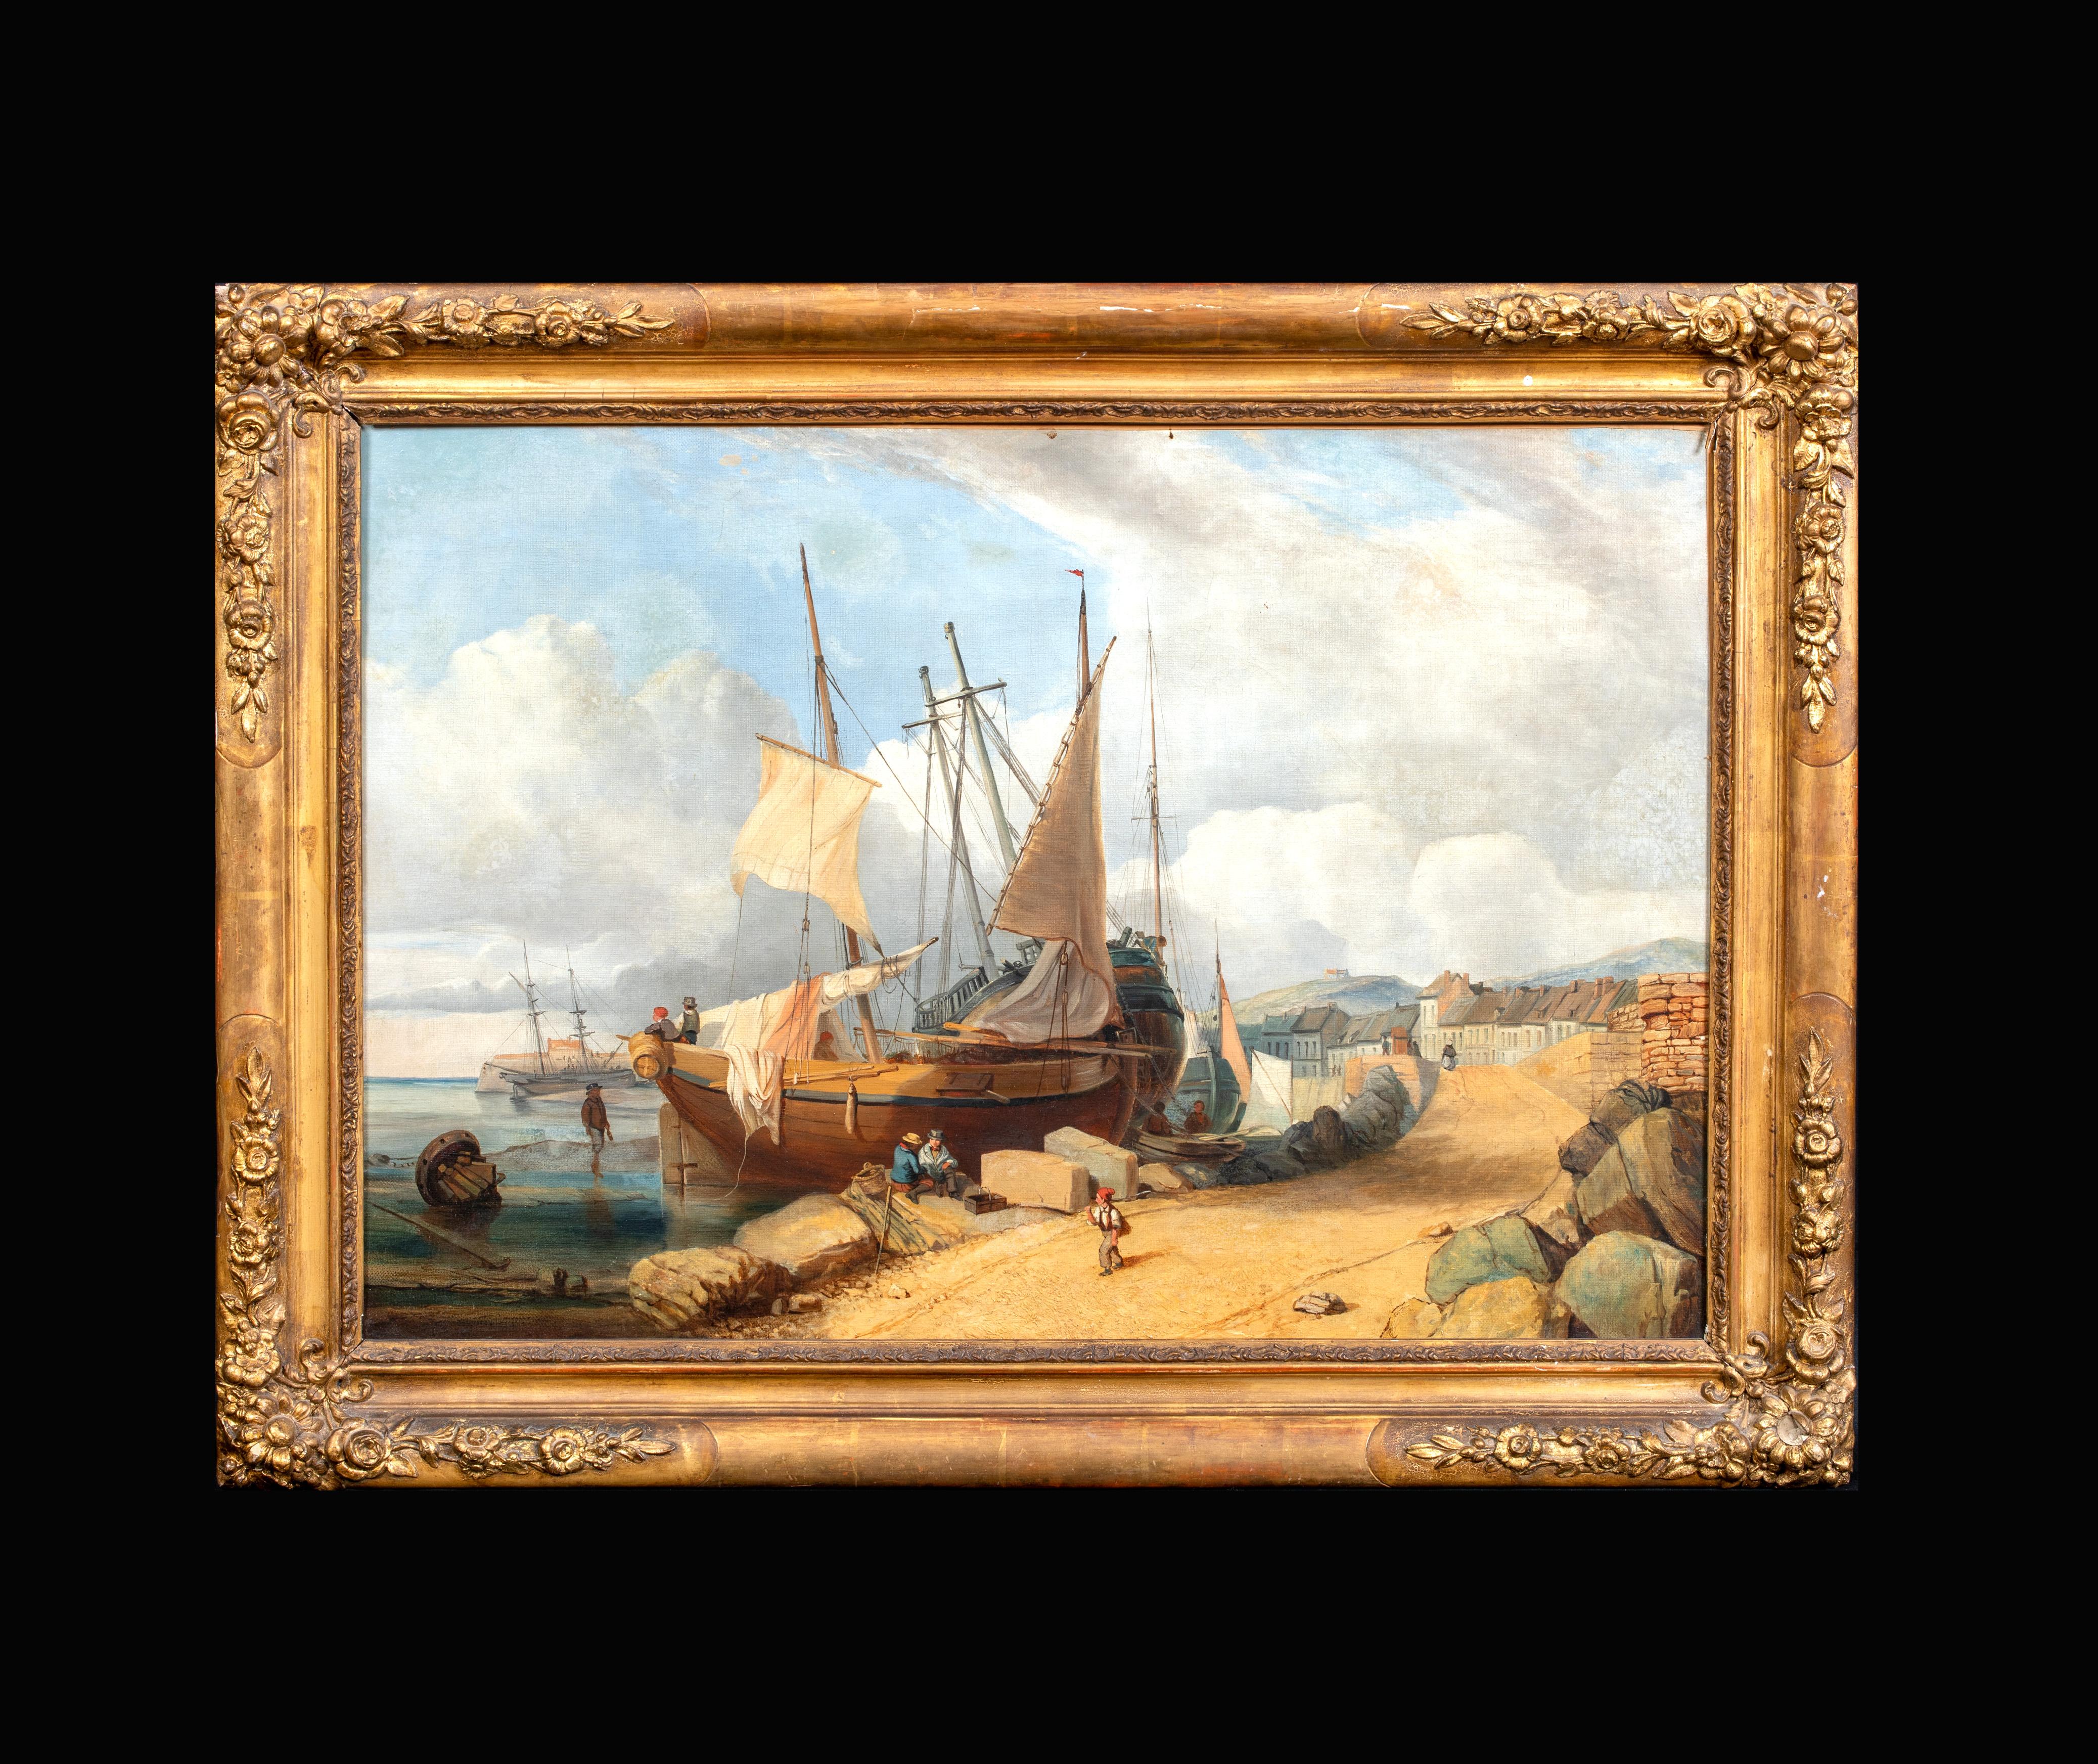 Ships & Fisherfolk, Normandy. 19th Century - Painting by Dommersen, Pieter Cornelis